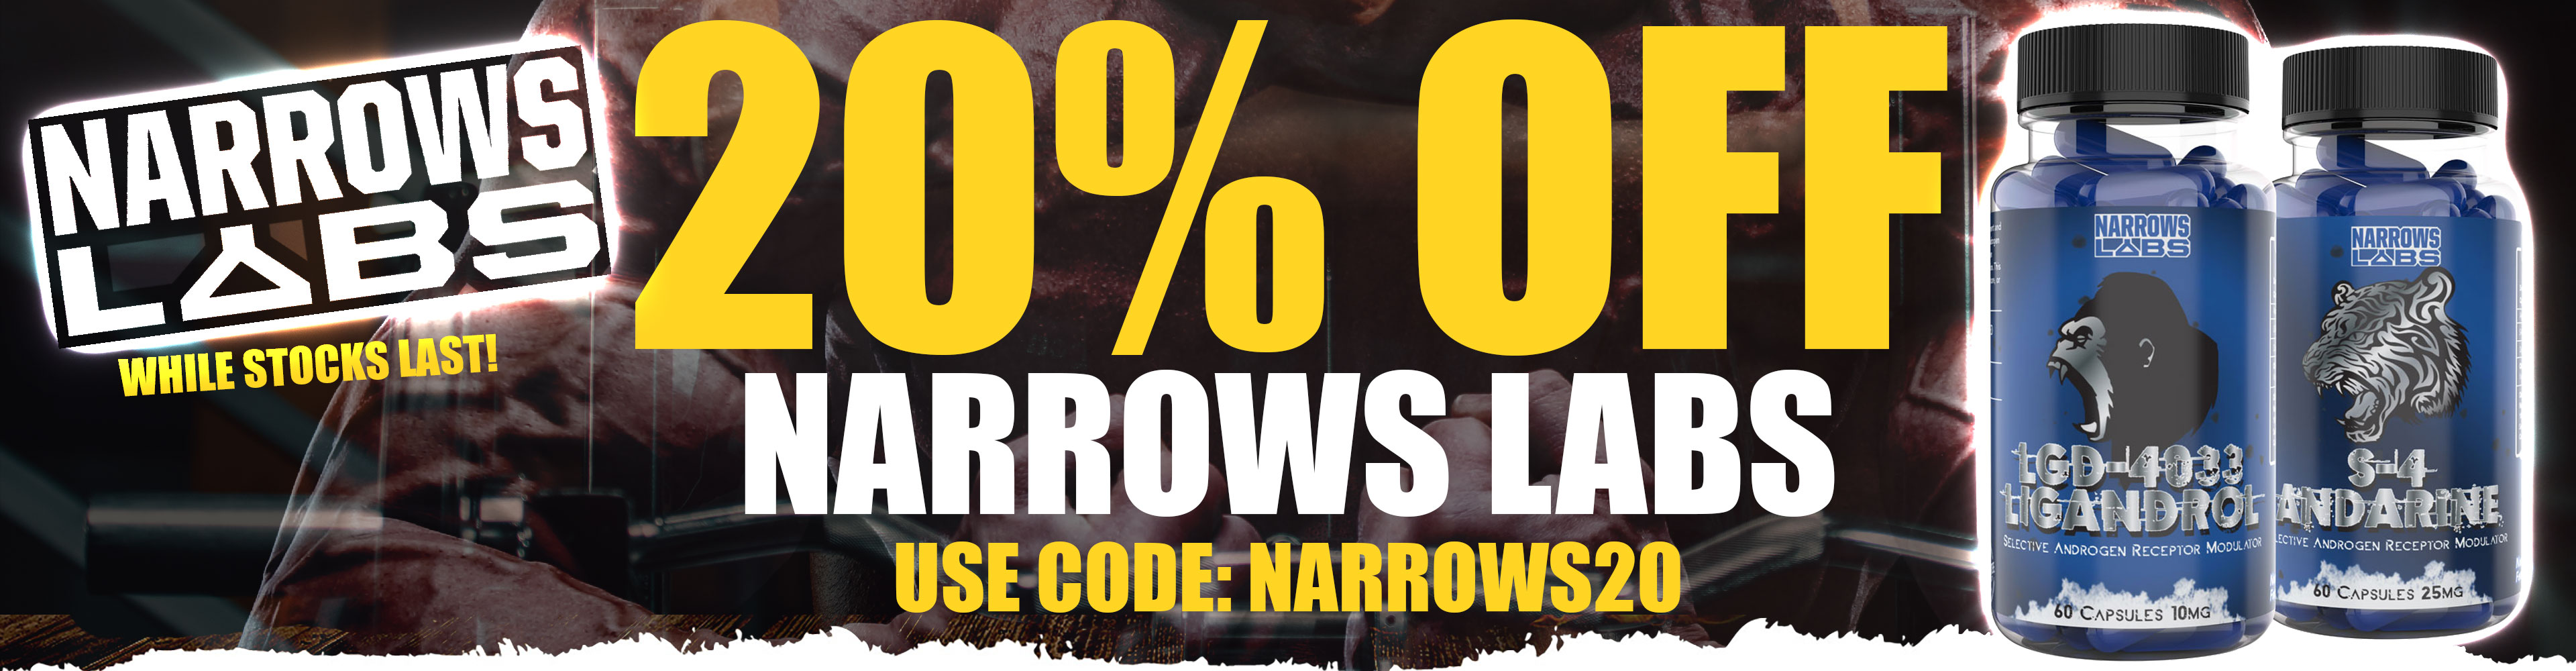 Narrows Labs 20% OFF